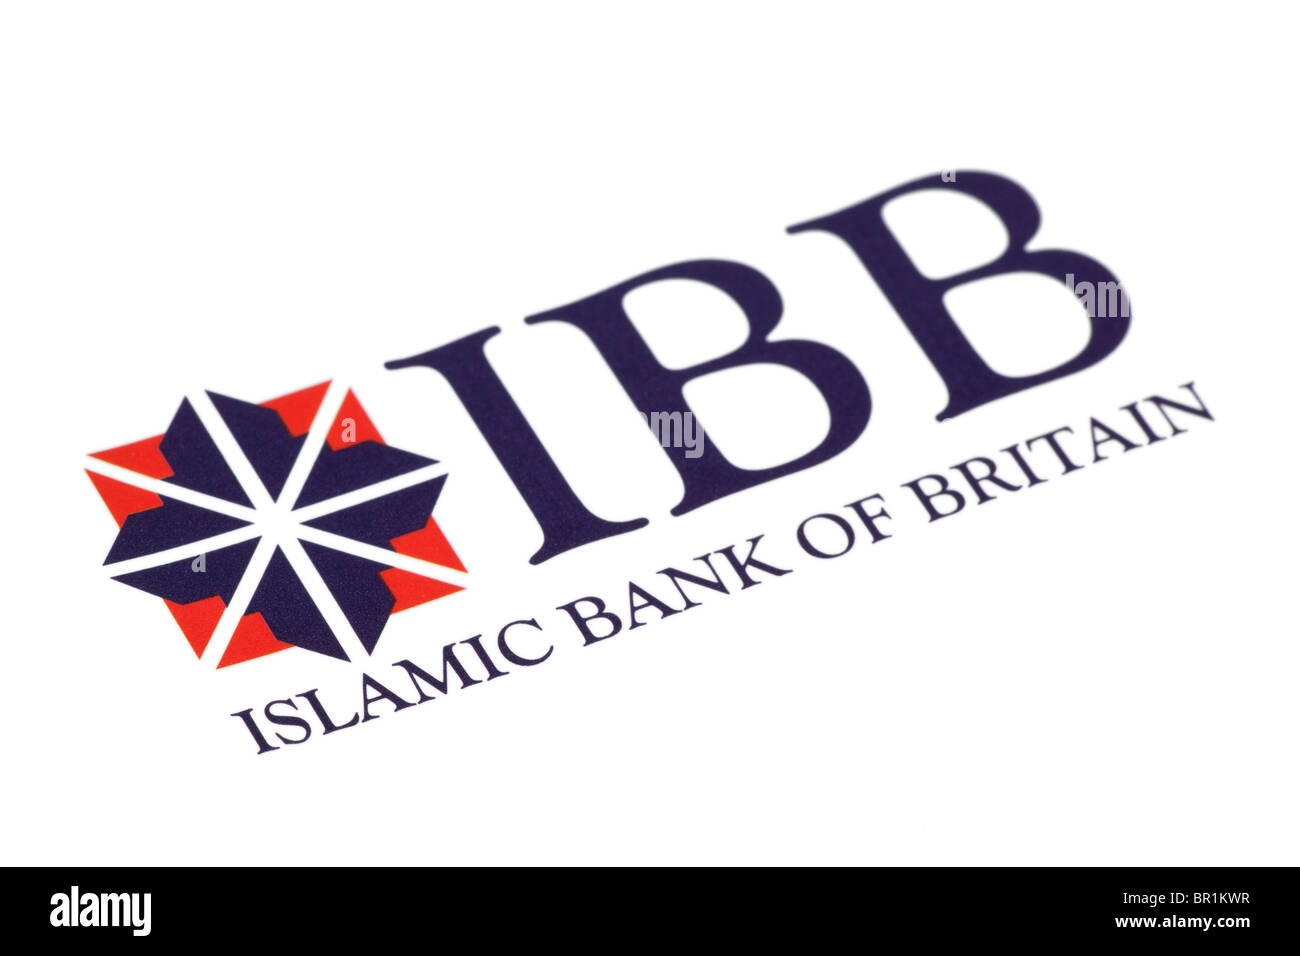 Ibb logo -Fotos und -Bildmaterial in hoher Auflösung – Alamy